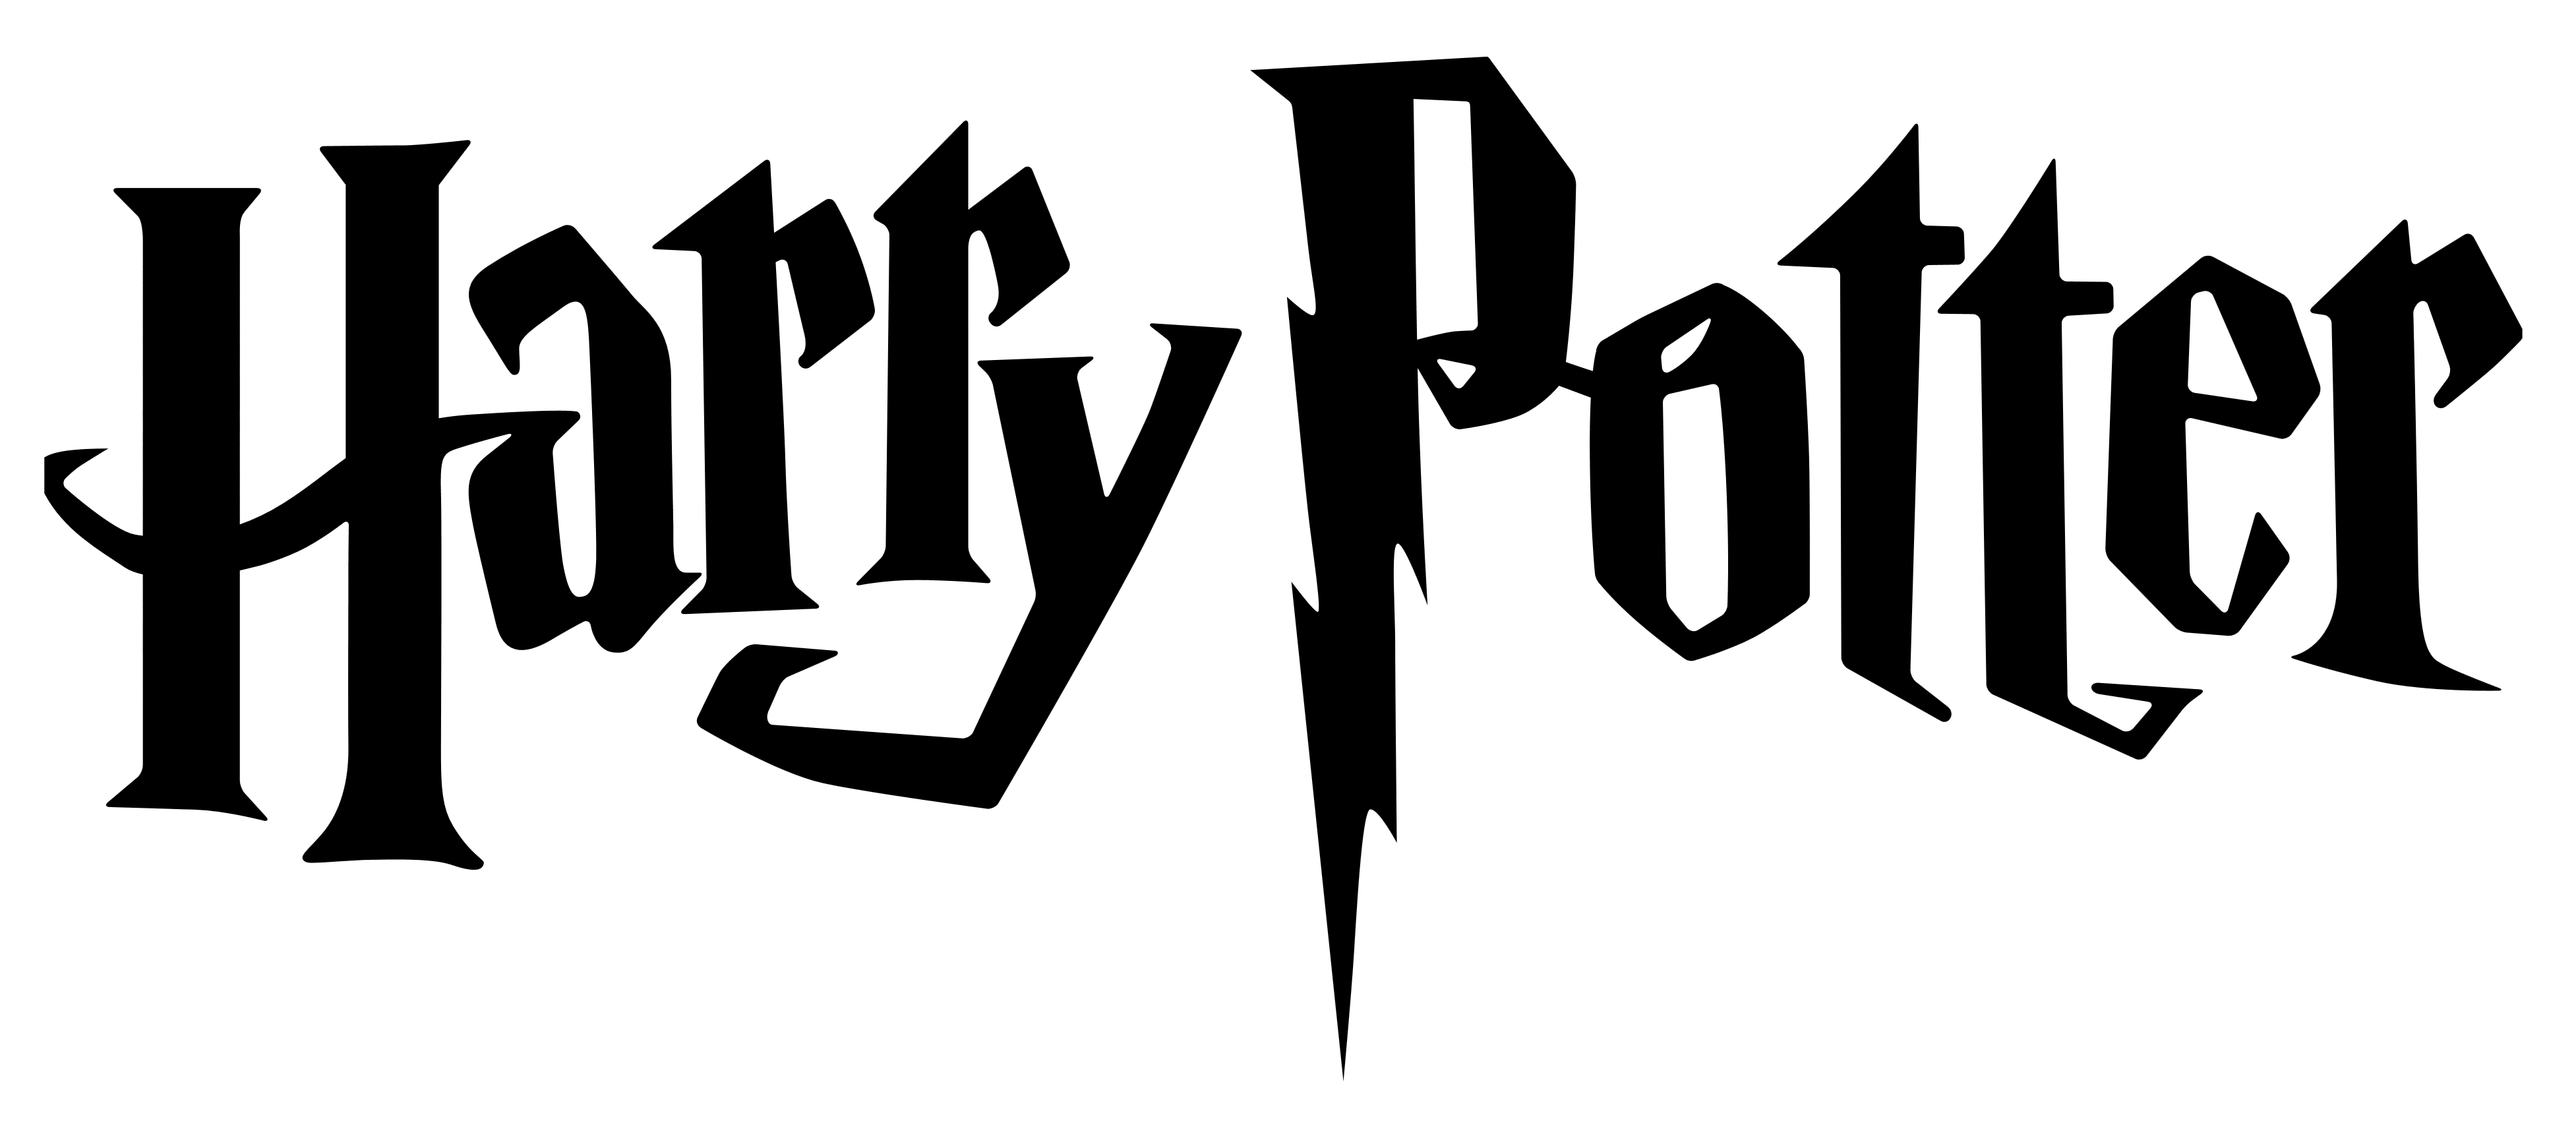 Harry Potter logo, logotype